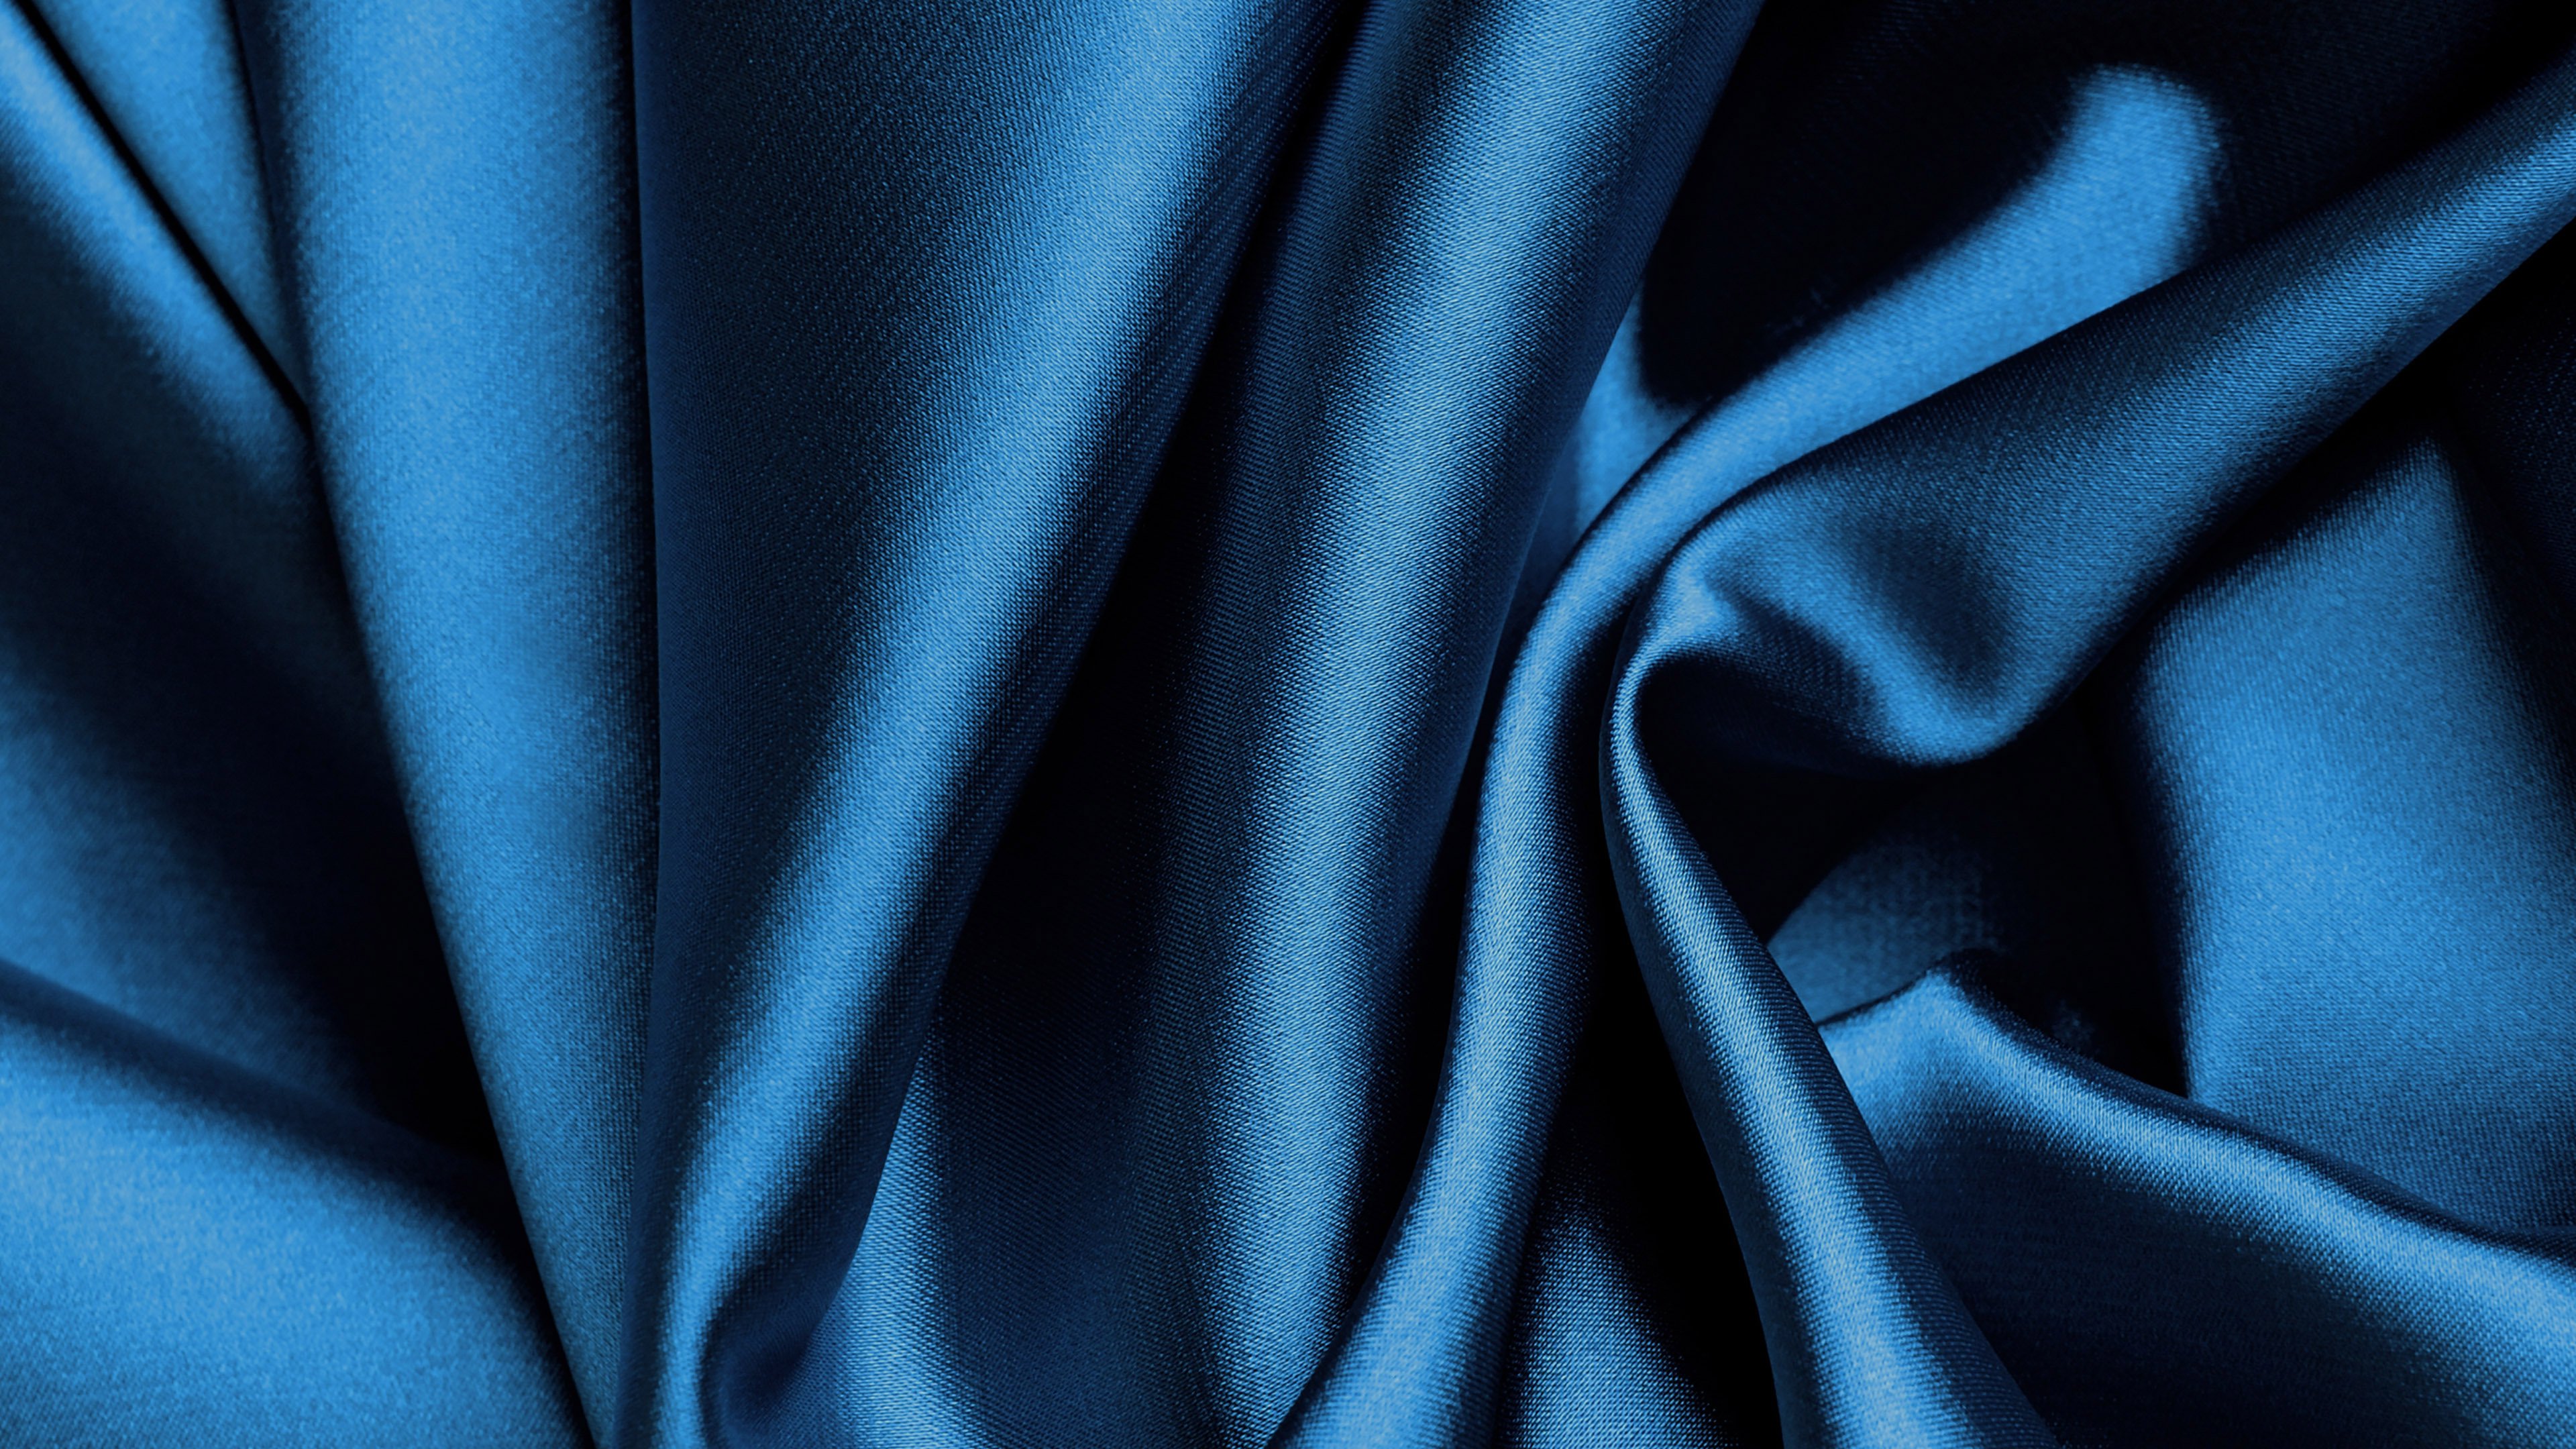 Textil Azul en Fotografía de Cerca. Wallpaper in 3840x2160 Resolution